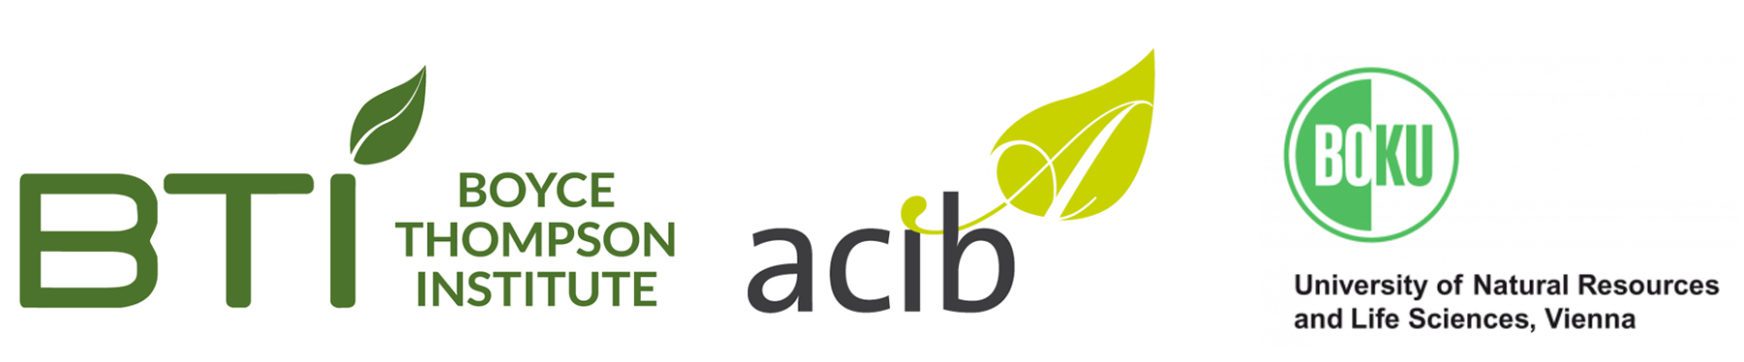 BTI, ACIB, and BOKU logos